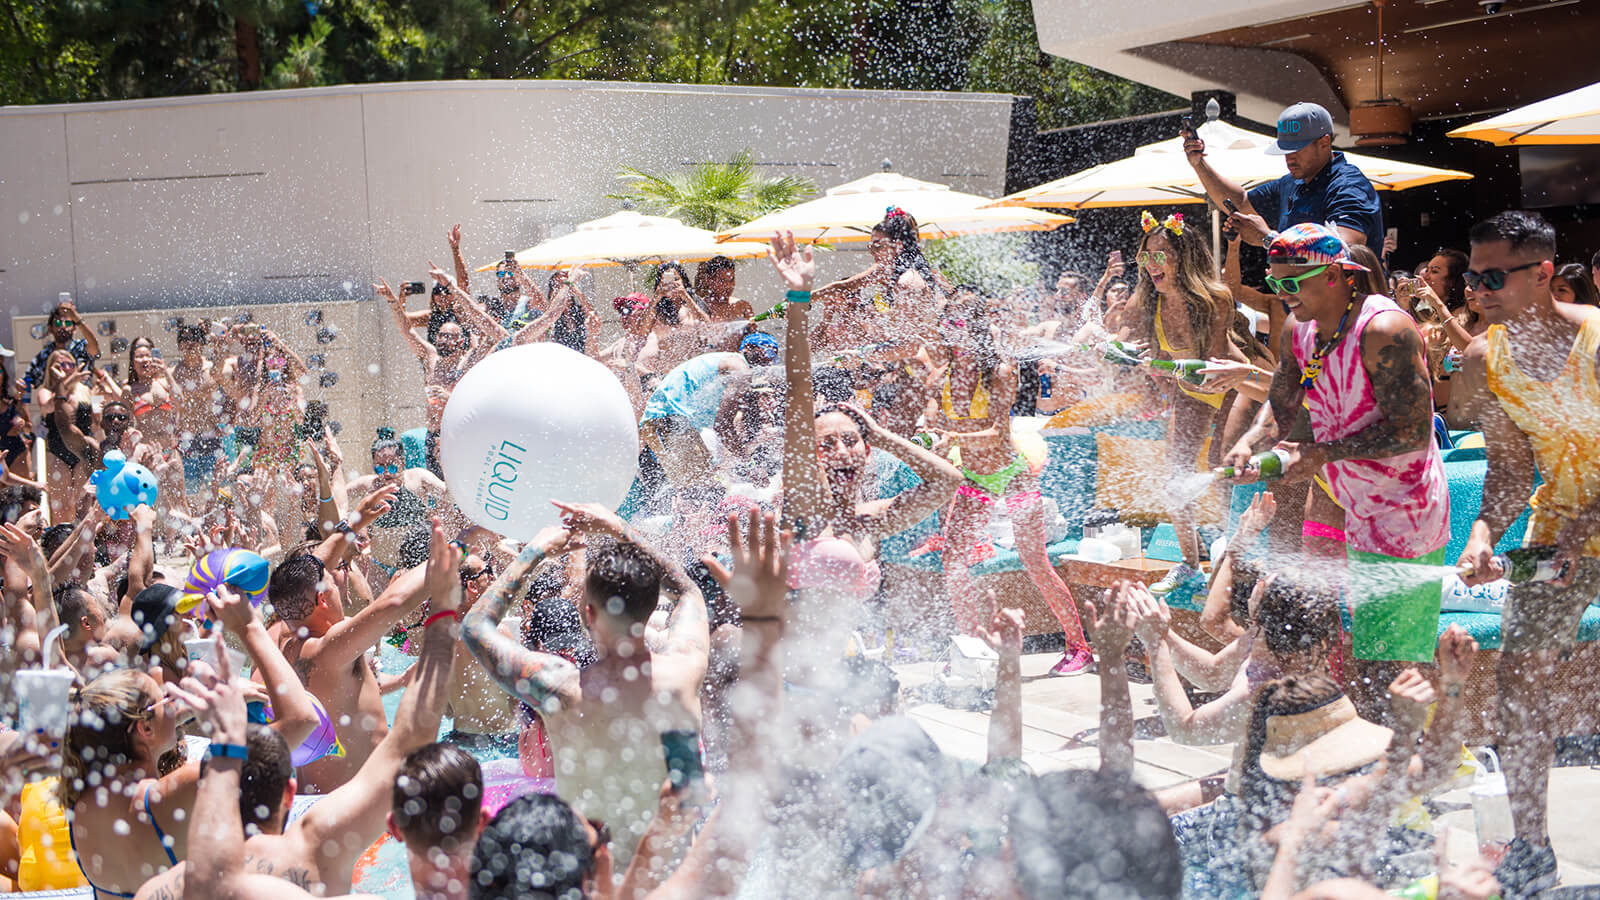 Official Website of Liquid Pool Lounge at ARIA Resort & Casino